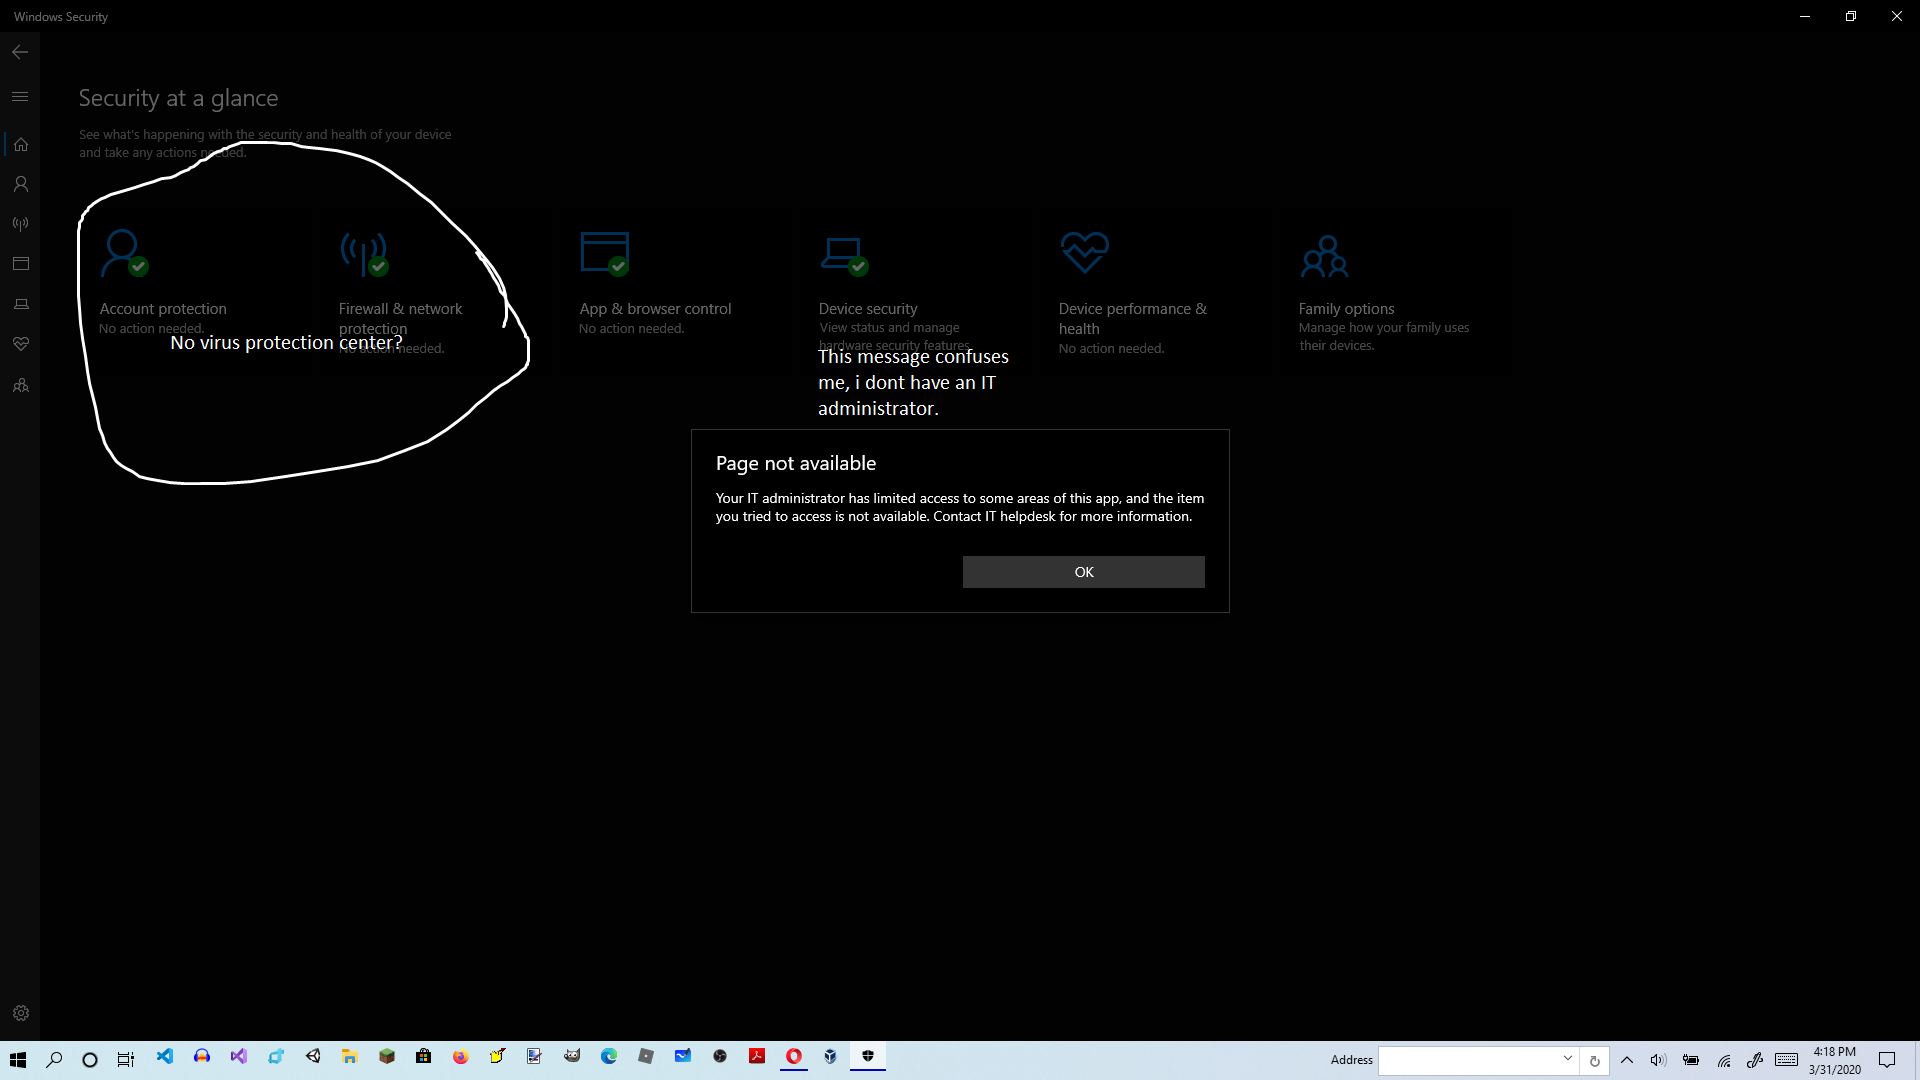 Windows Defender acting up? ae5f0706-337c-489b-850e-4bde0ee557c2?upload=true.png